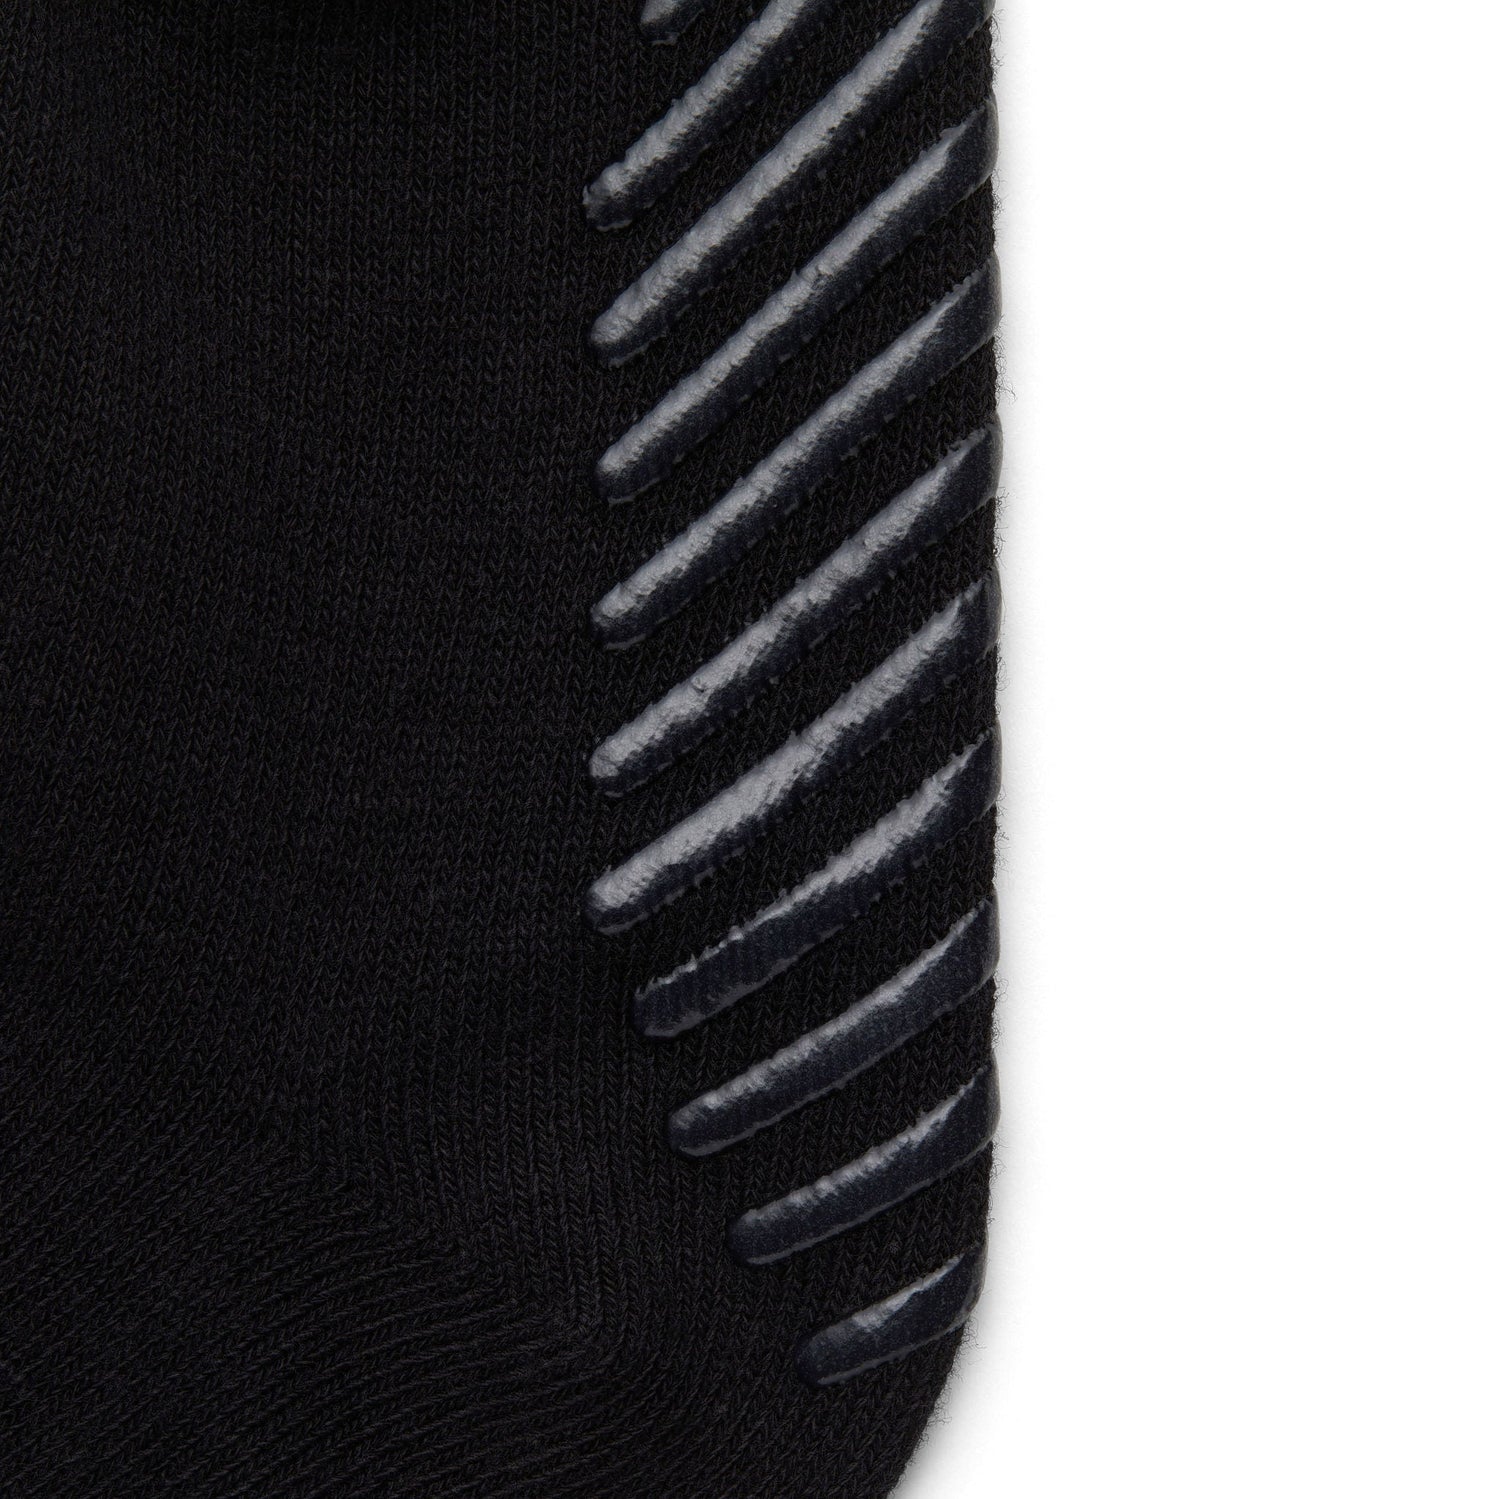 Close up of black anti slip kids socks with tread pattern on the bottom.